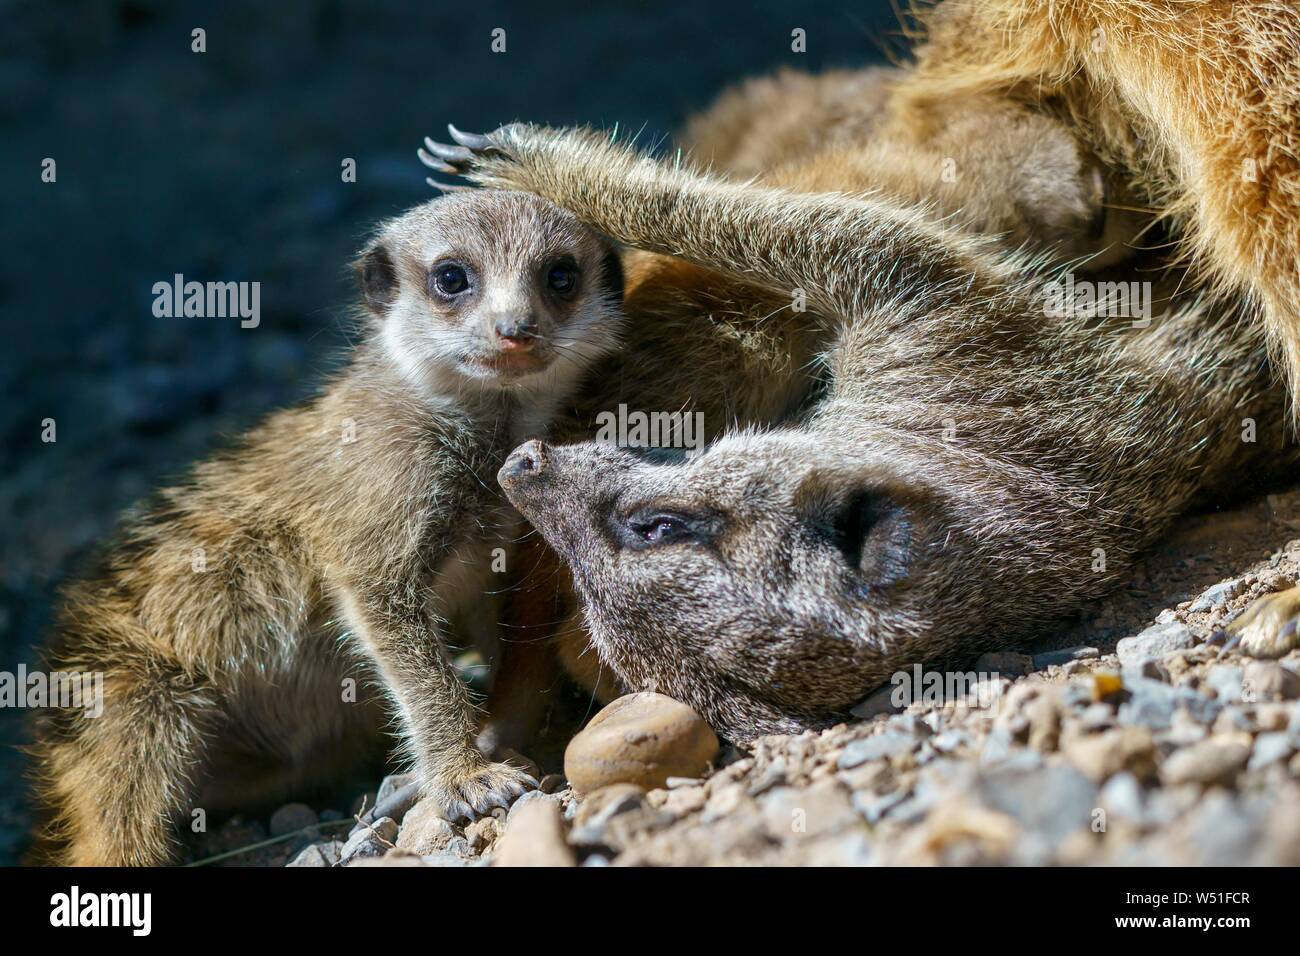 Meerkats (Suricata suricatta), young animals playing, Germany Stock Photo